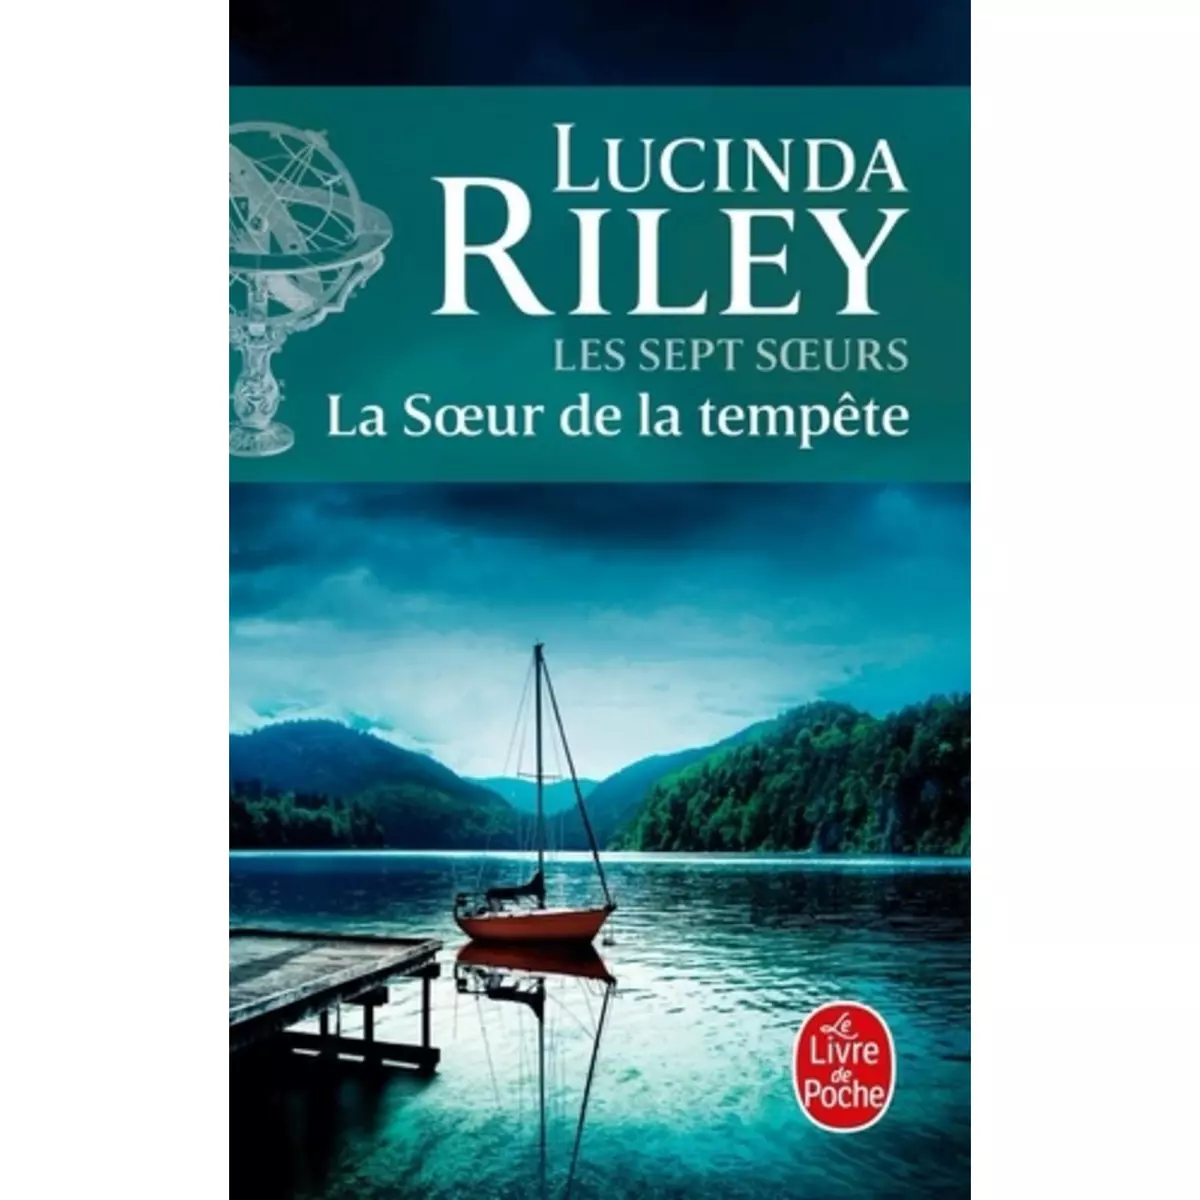  LES SEPT SOEURS TOME 2 : LA SOEUR DE LA TEMPETE. ALLY, Riley Lucinda